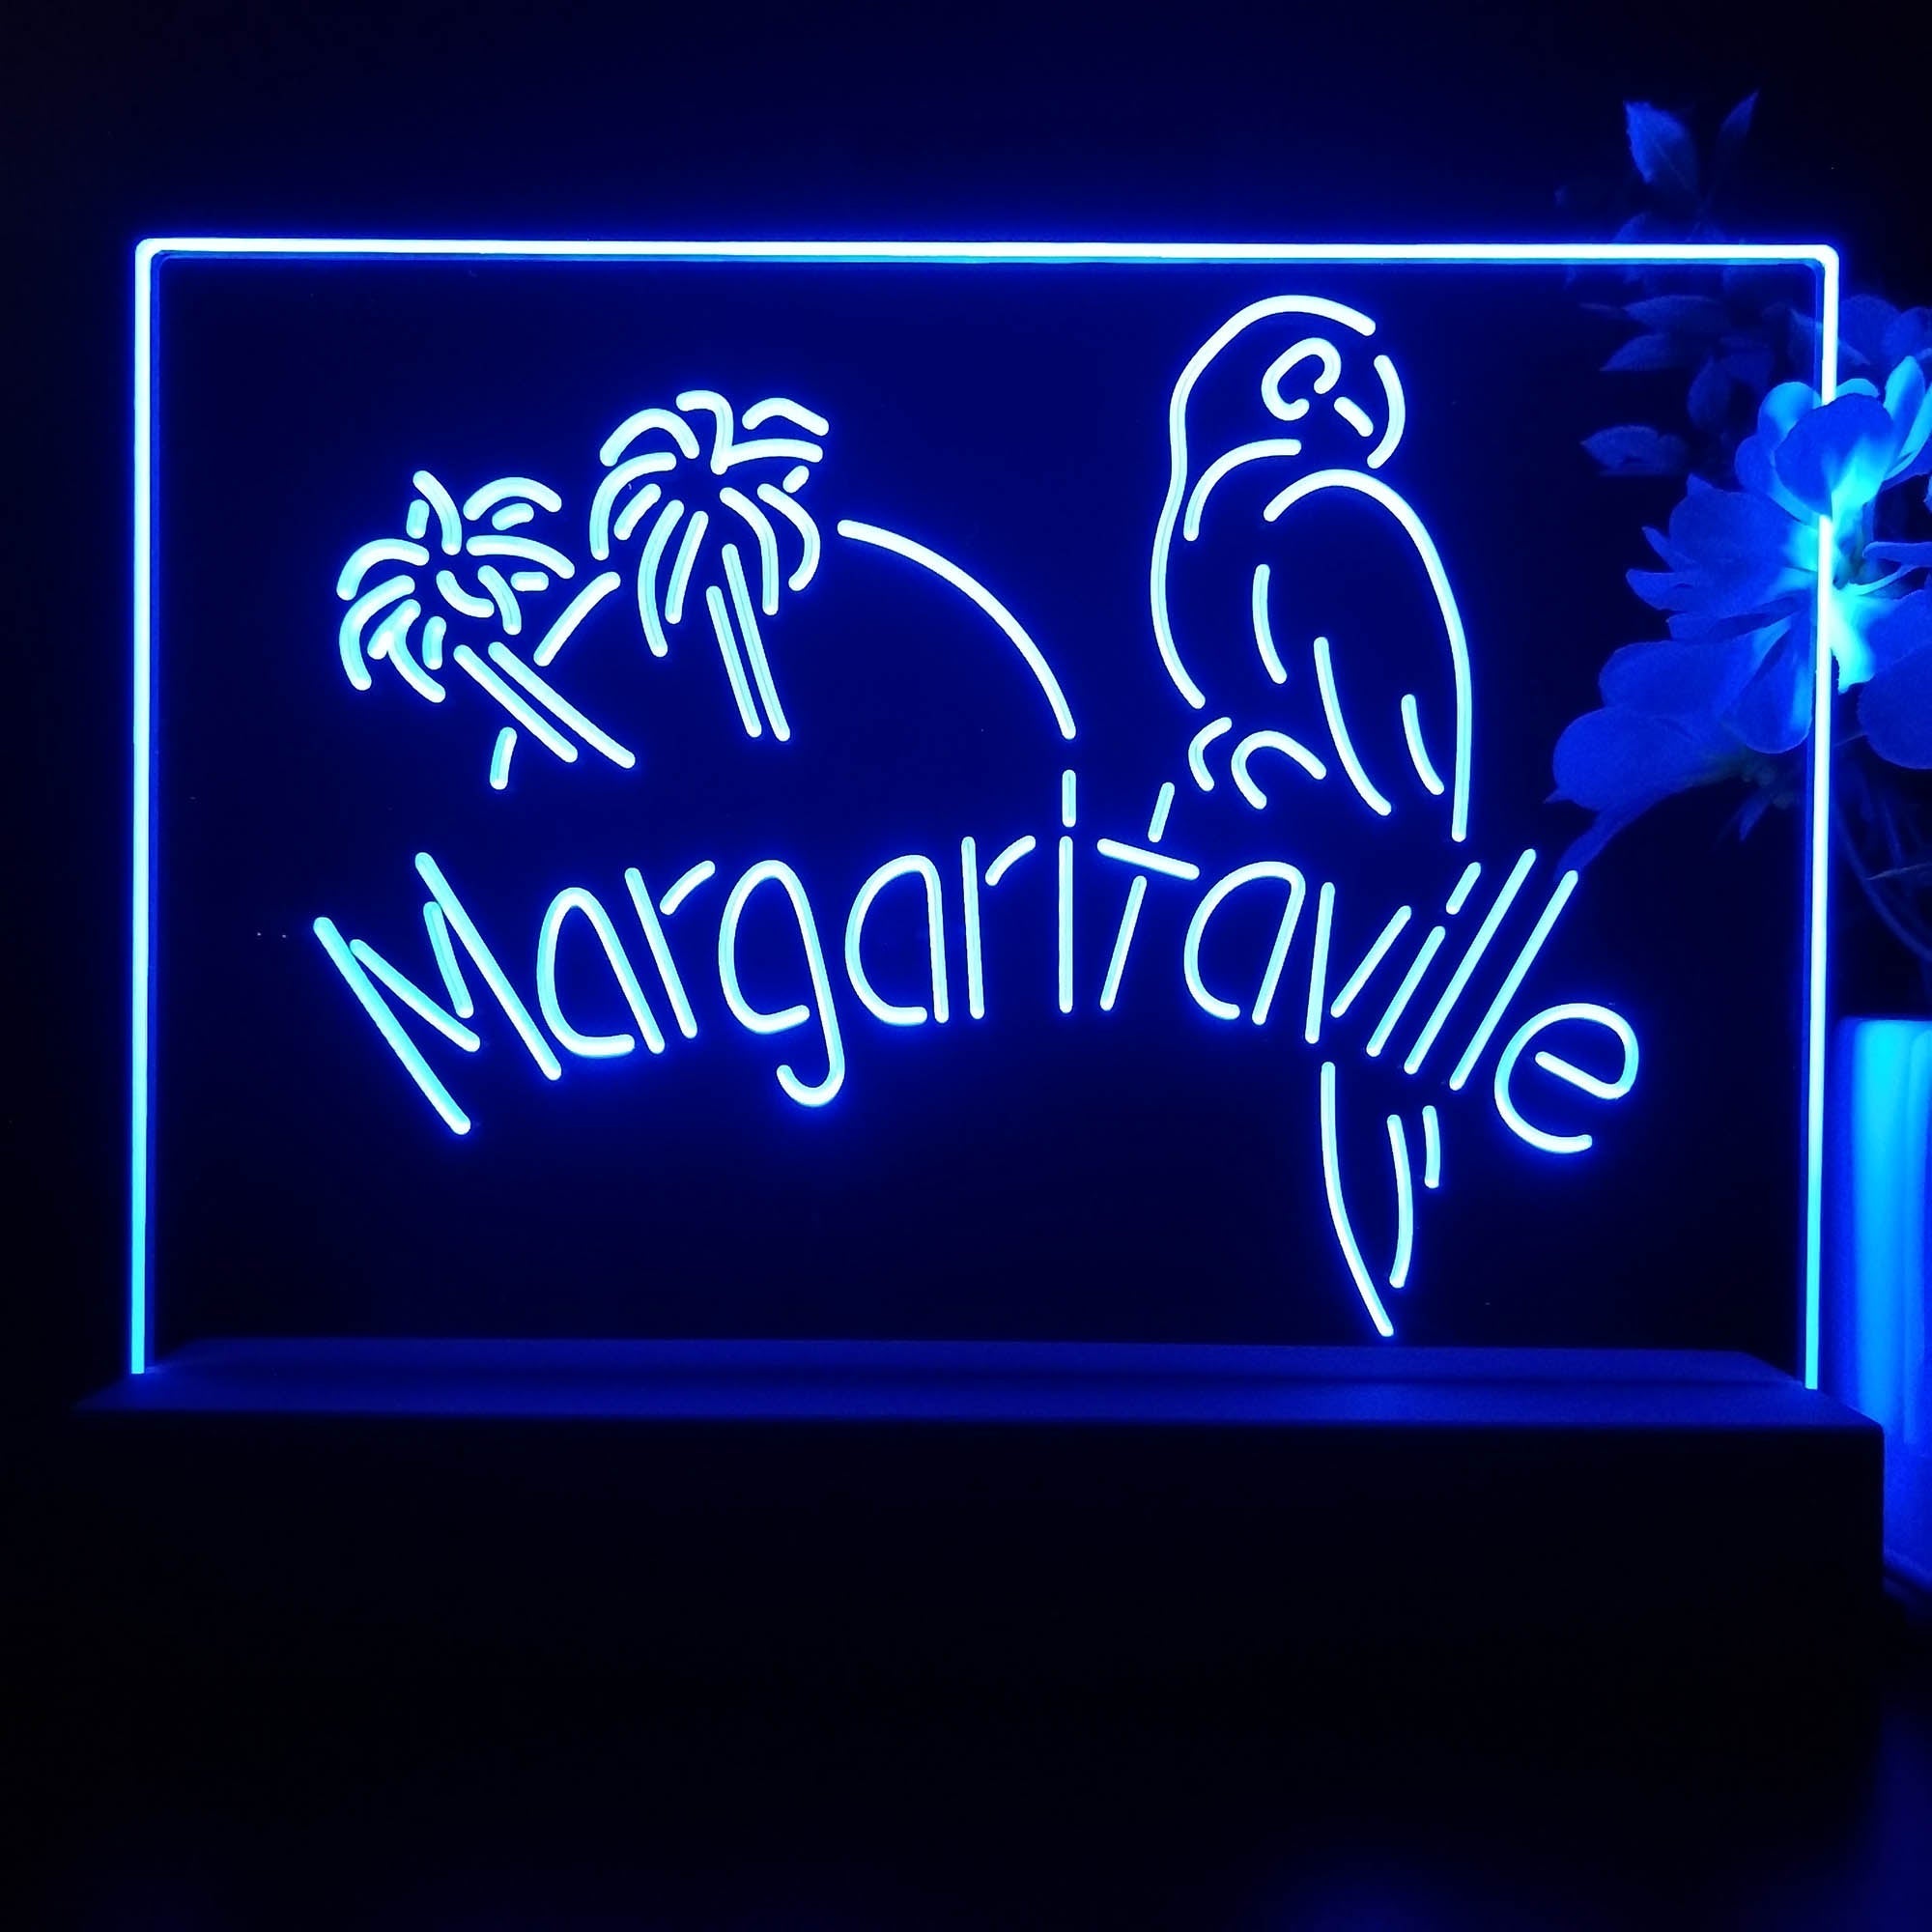 Jimmy Buffett Margaritaville Neon Sign Pub Bar Lamp